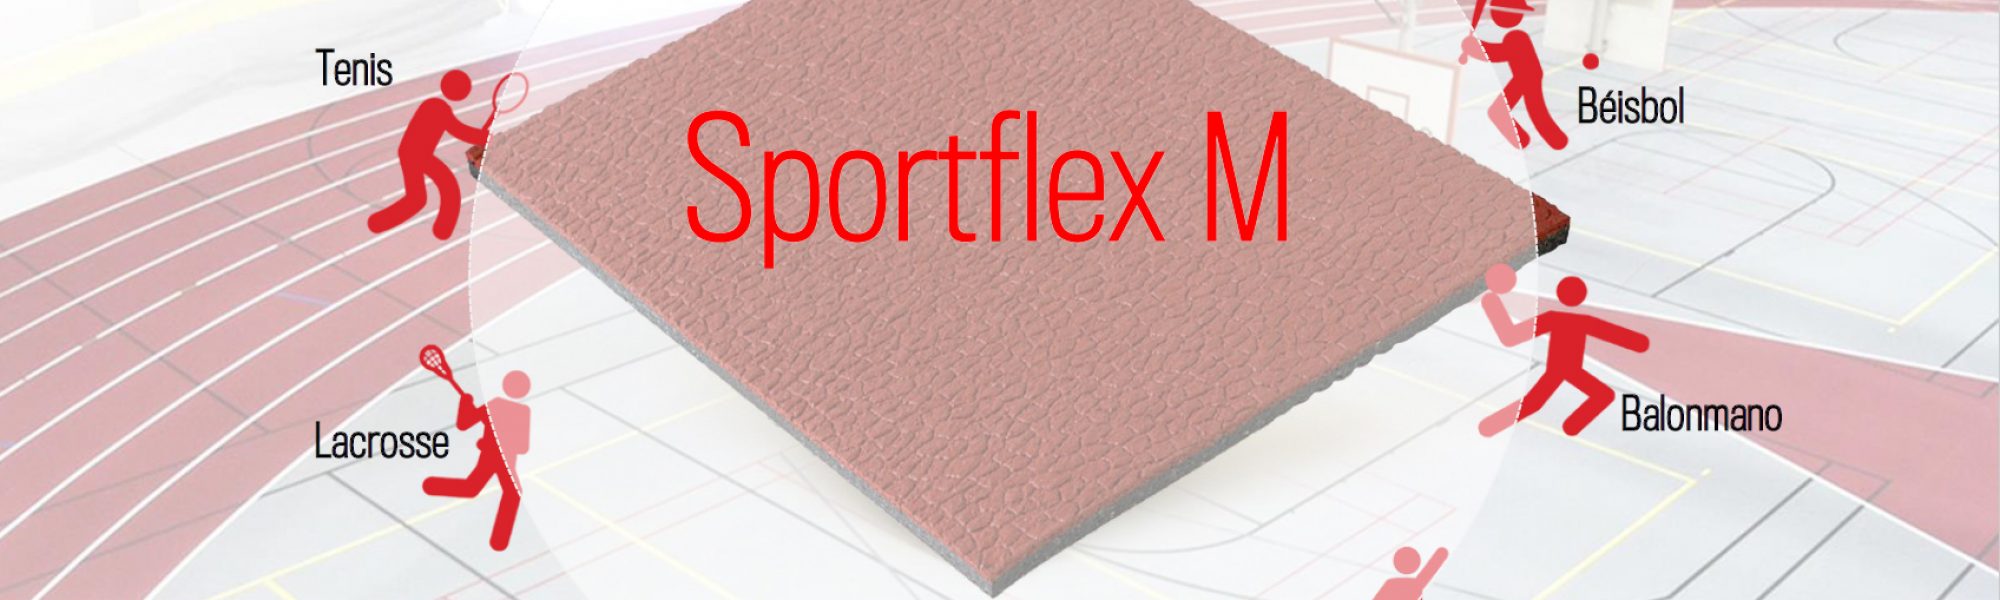 Sportflex_M_